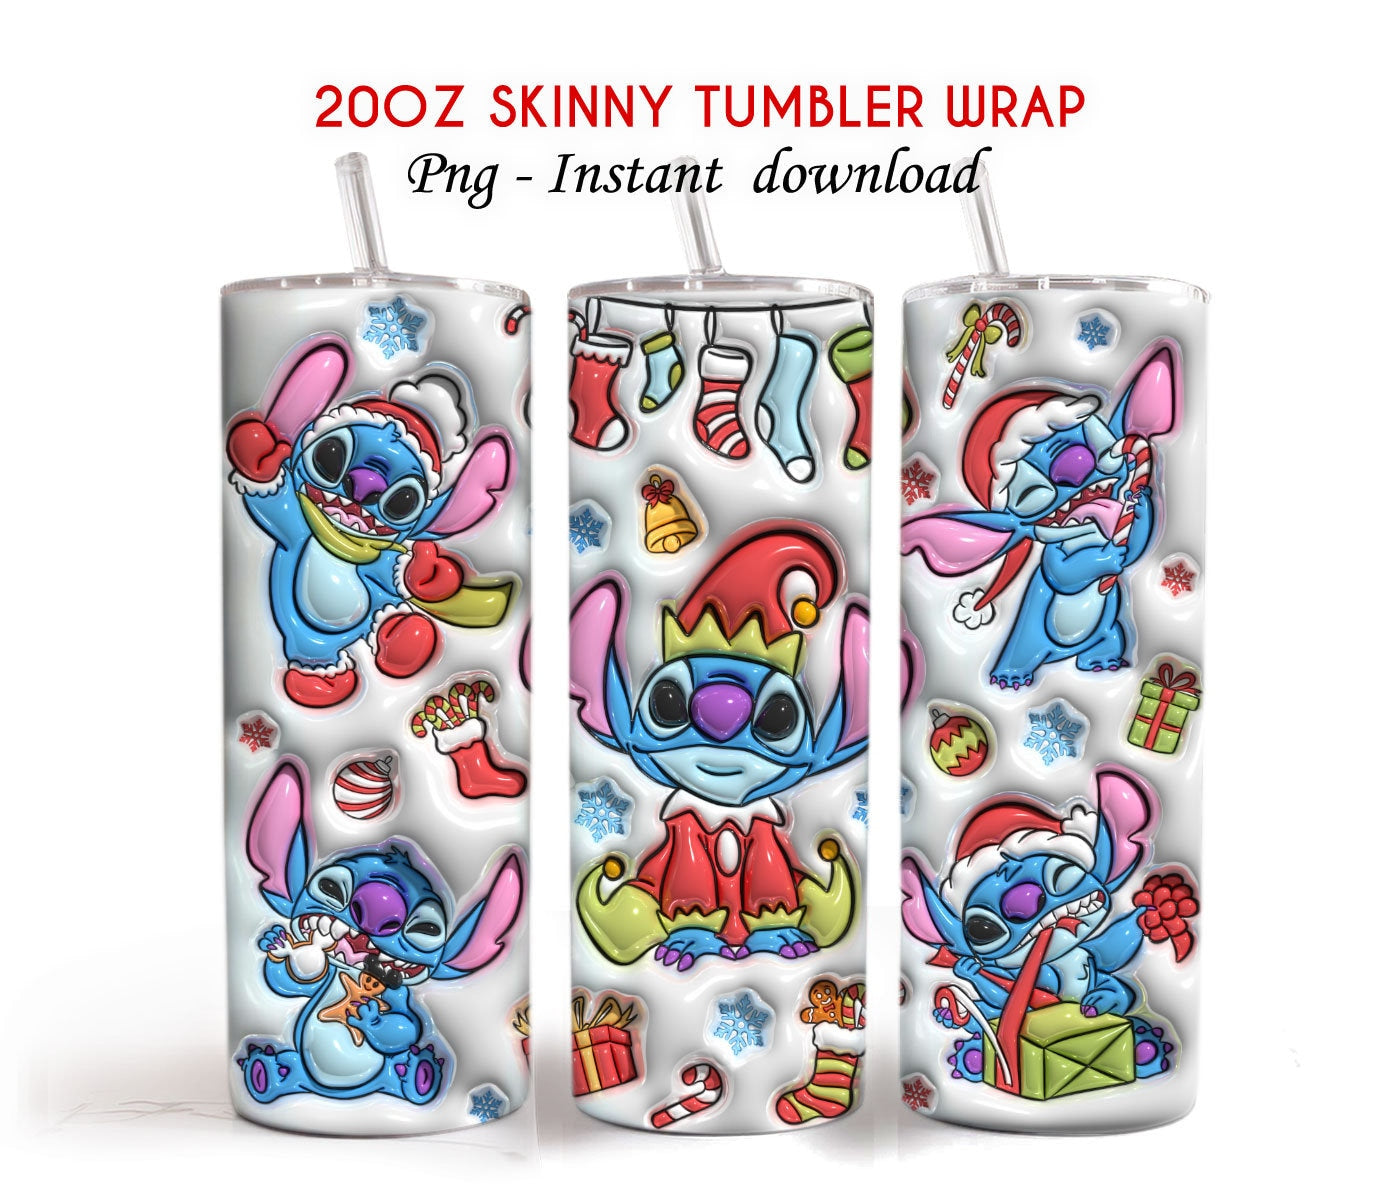 3D Inflated Christmas Tumbler, Inflated Cartoon Tumbler, 3D Puffy Christmas Tumbler, 3D Tumbler Wrap, 20oz Skinny Tumbler, Christmas Vibes - VartDigitals